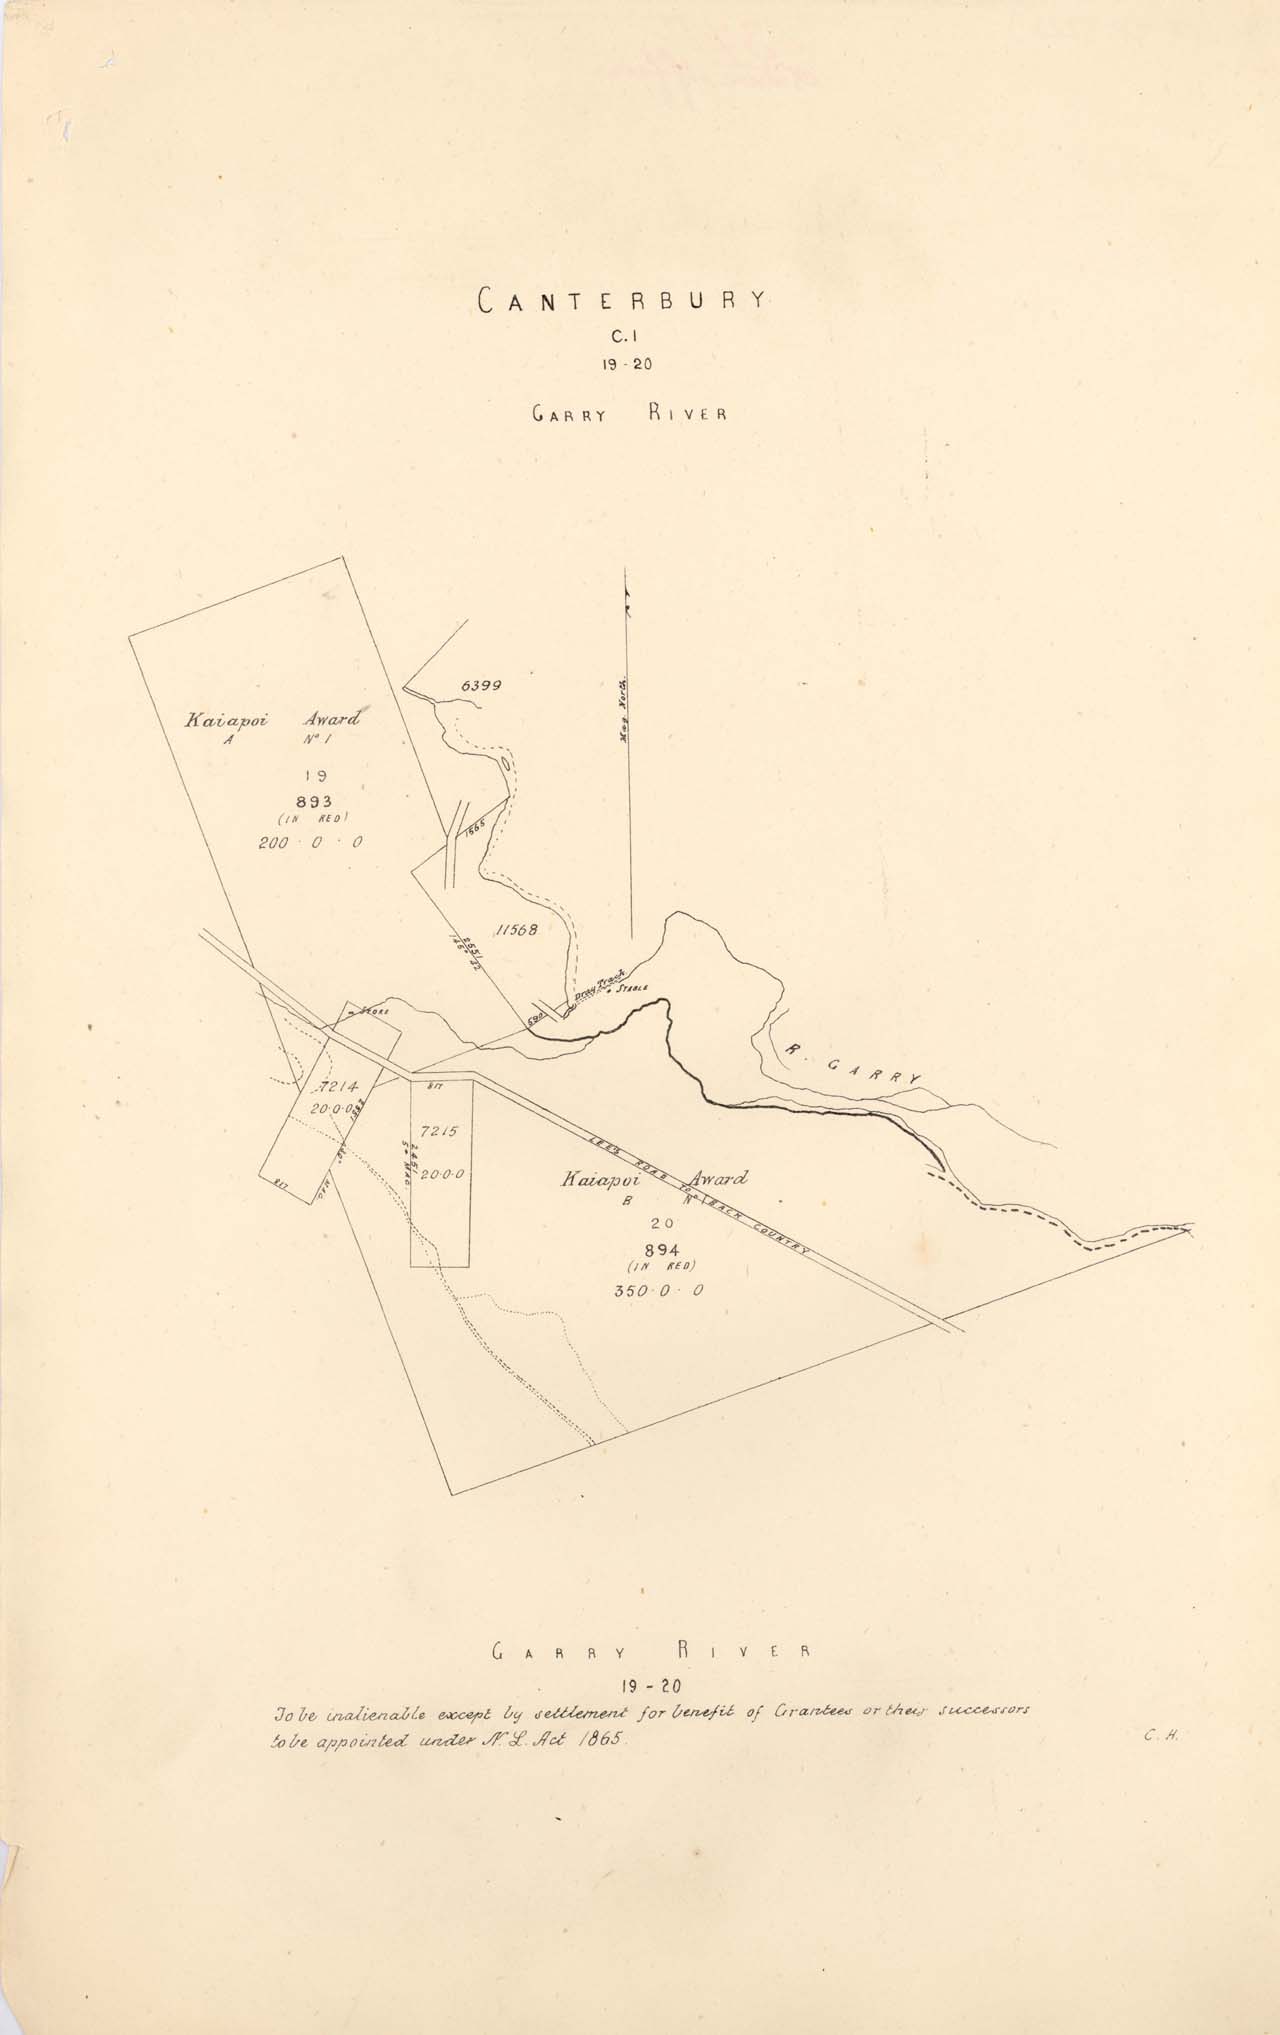 Reserve 893 & 894 - Garry River [Kaiapoi] - 1870